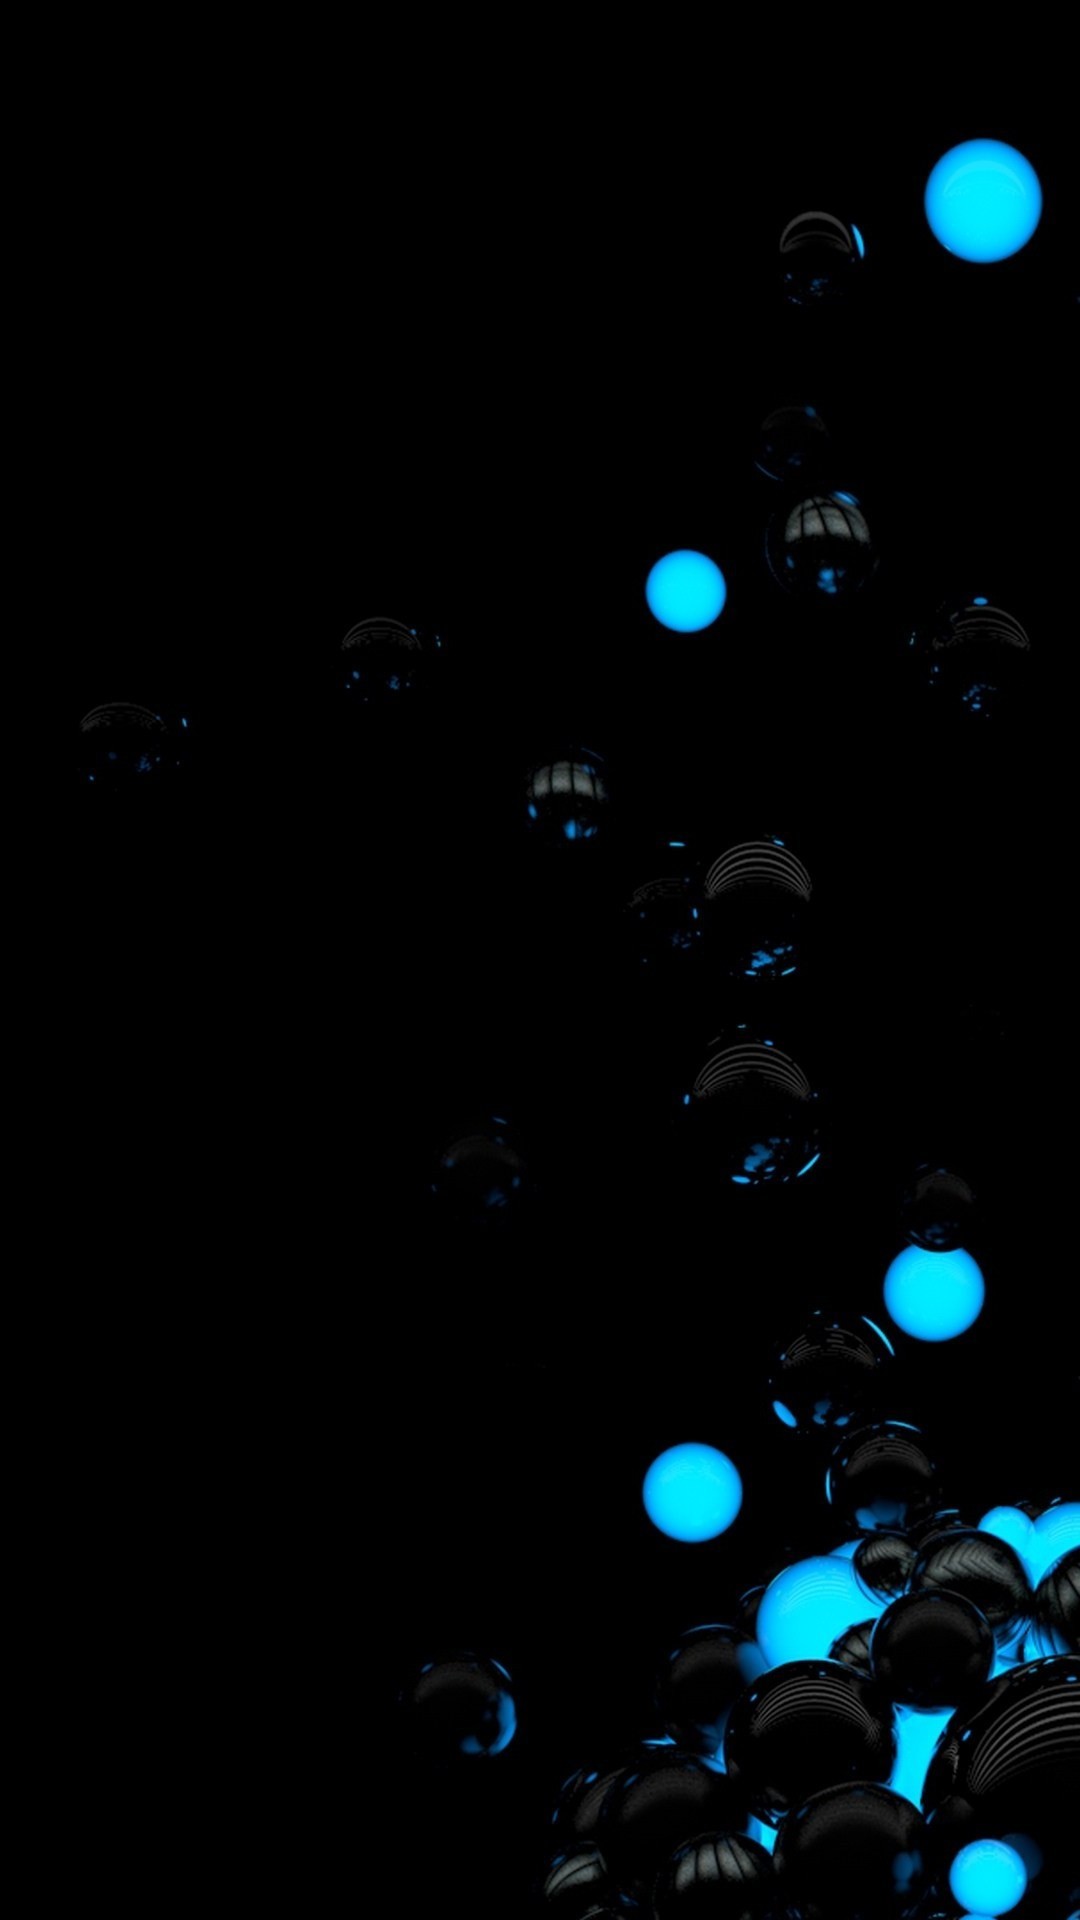 Black And Blue Spheres Mobile Wallpaper